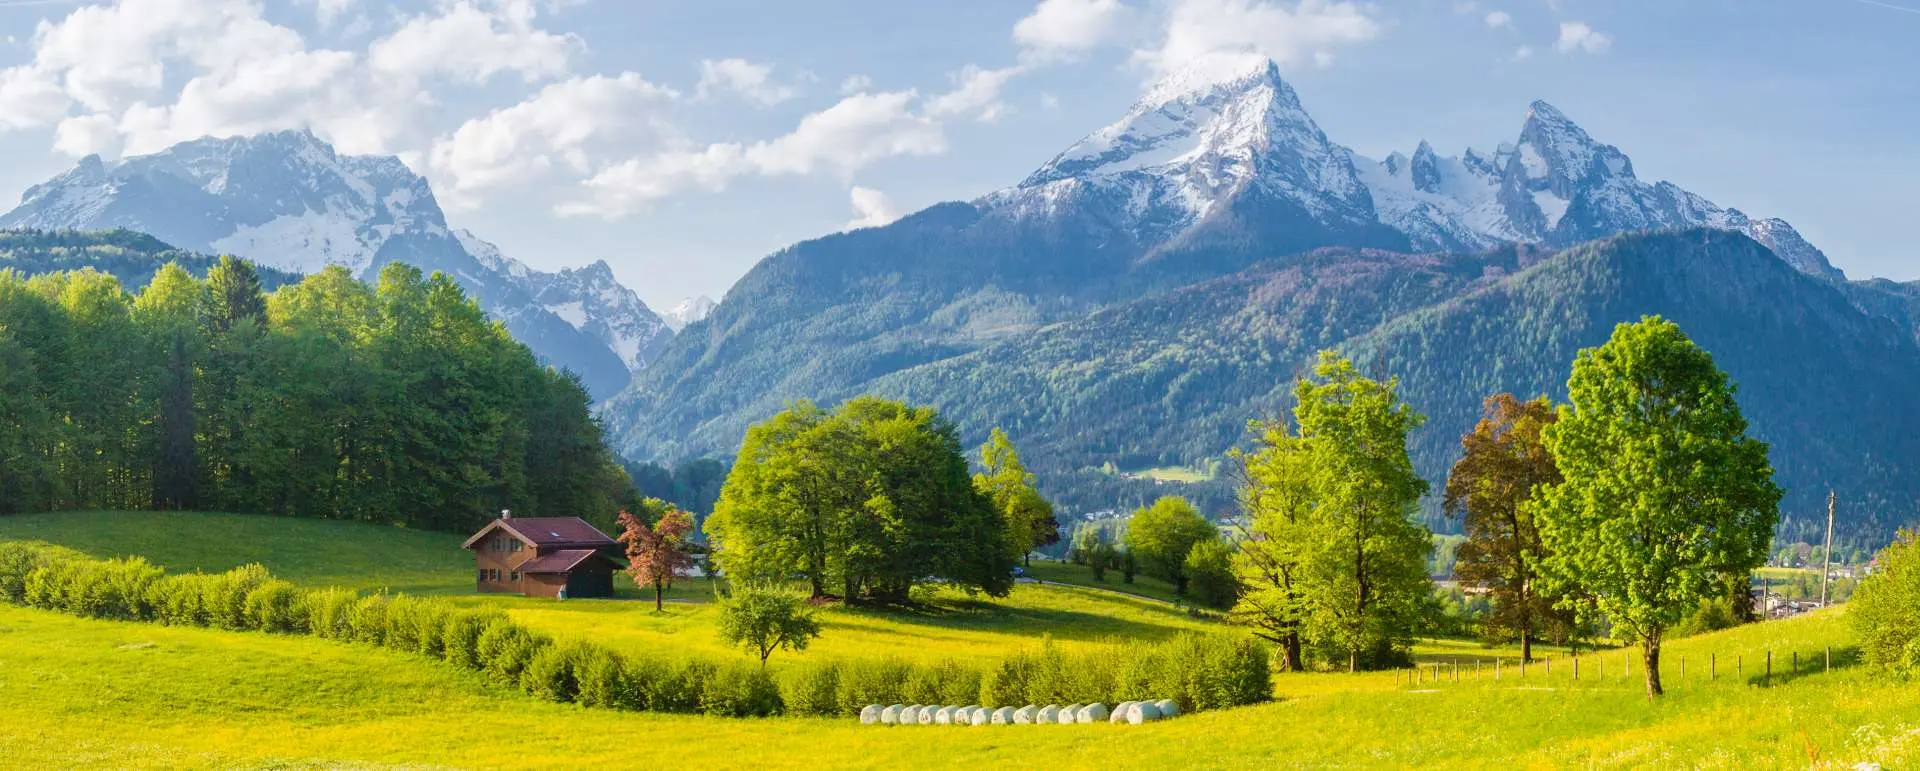 Berchtesgadener Land - la destinazione per i gruppi